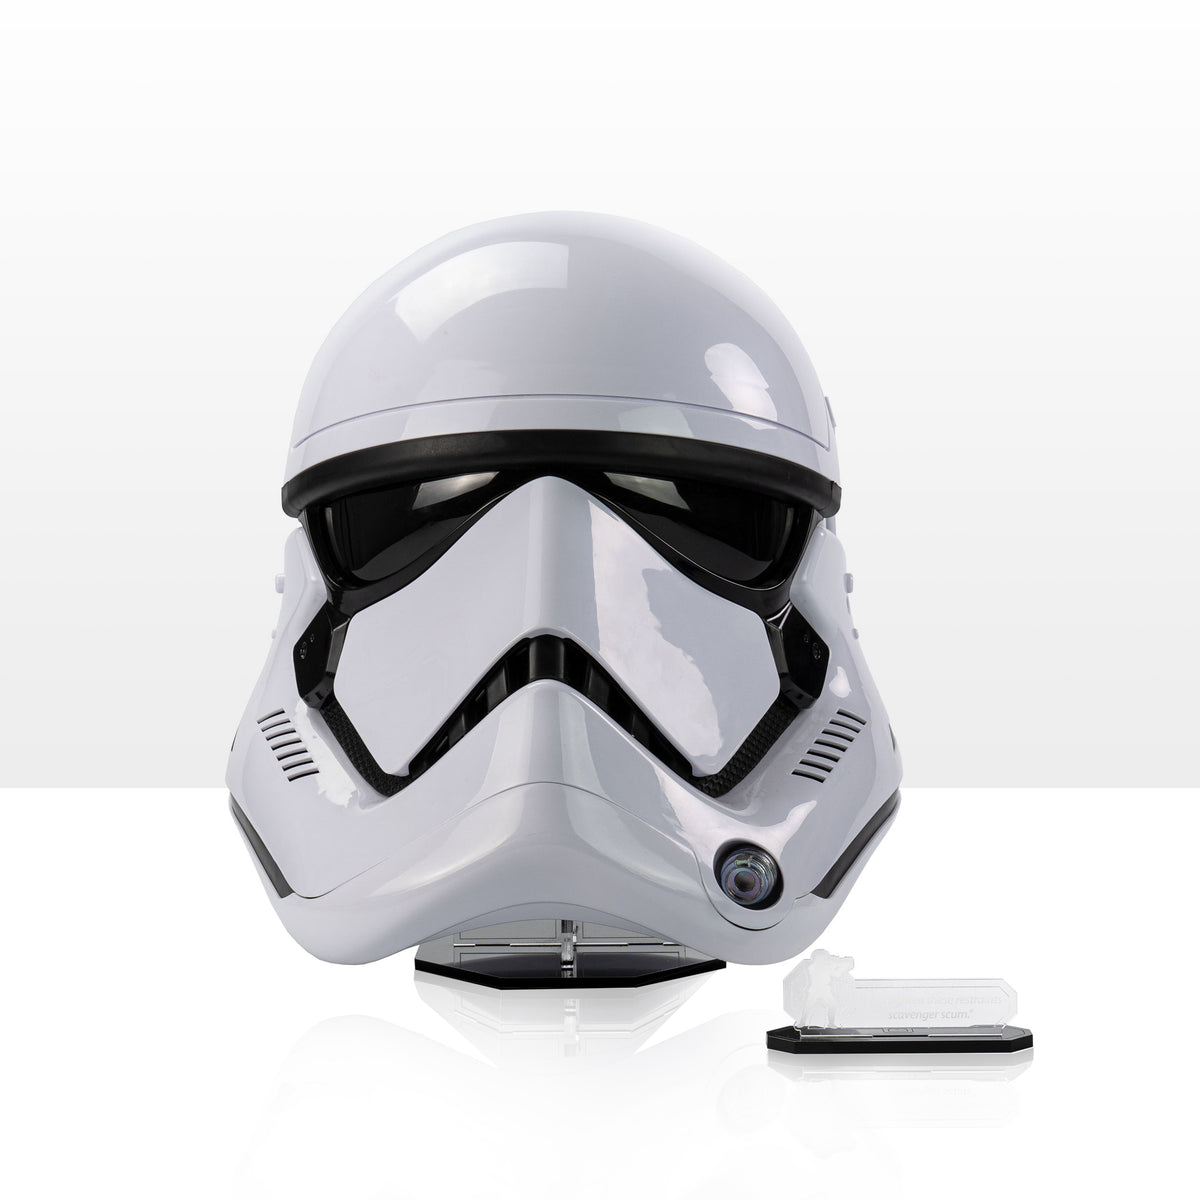 Helmet Stand Hasbro Star Wars Black Series / Stormtrooper Helmet Stand /  Darth Vader Hasbro Black Series